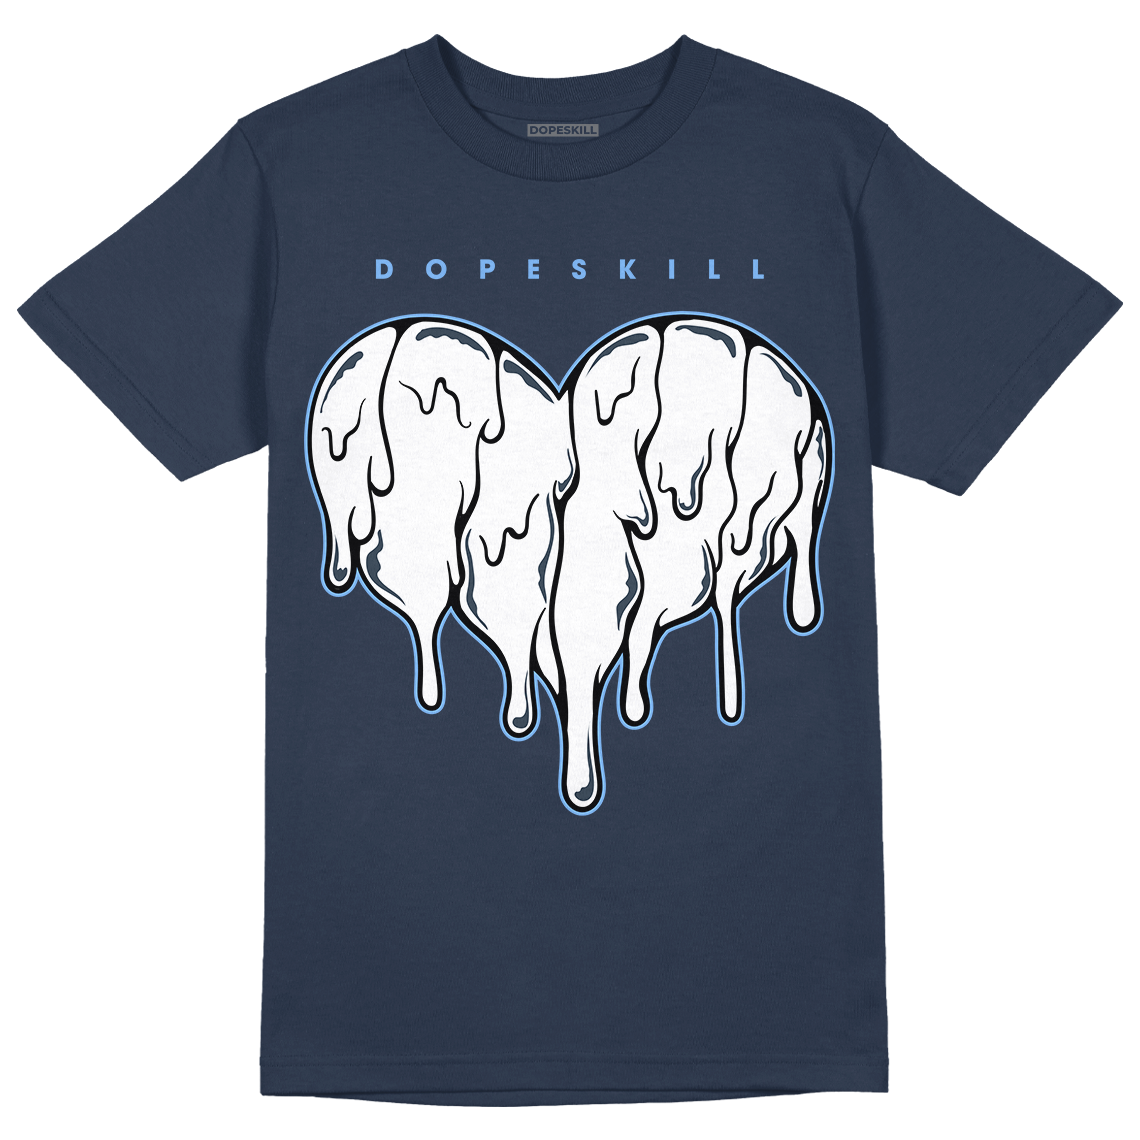 Jordan 6 Midnight Navy DopeSkill T-shirt Slime Drip Heart Graphic